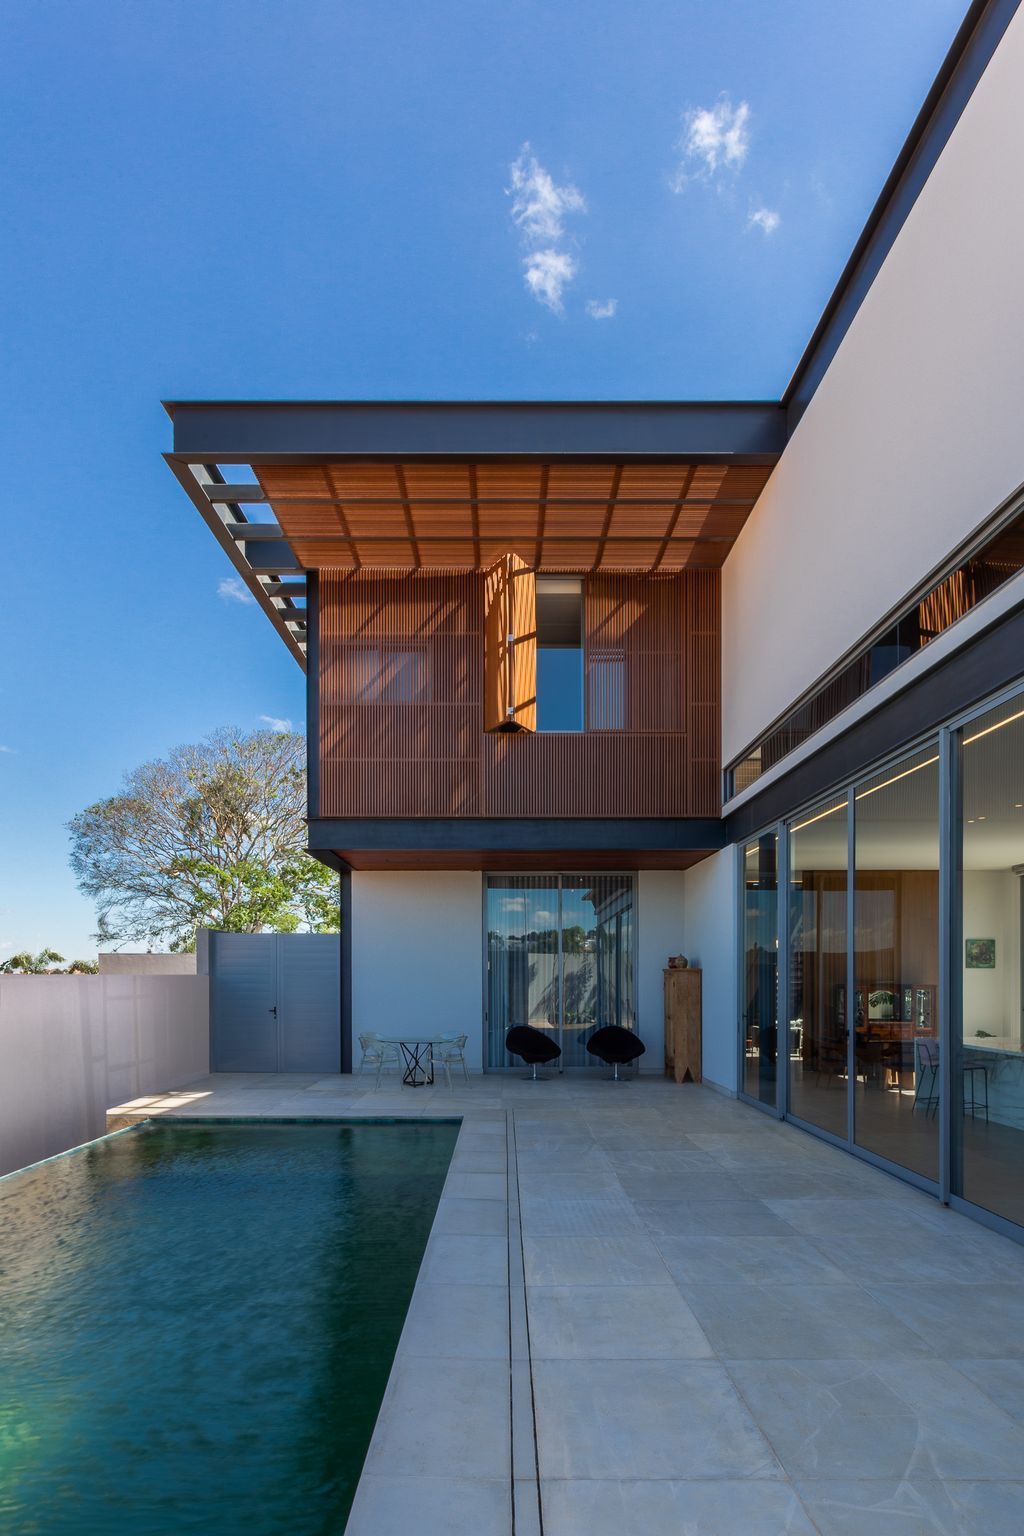 LM House, a practical and comfortable Home by João de Barro Arquitetura